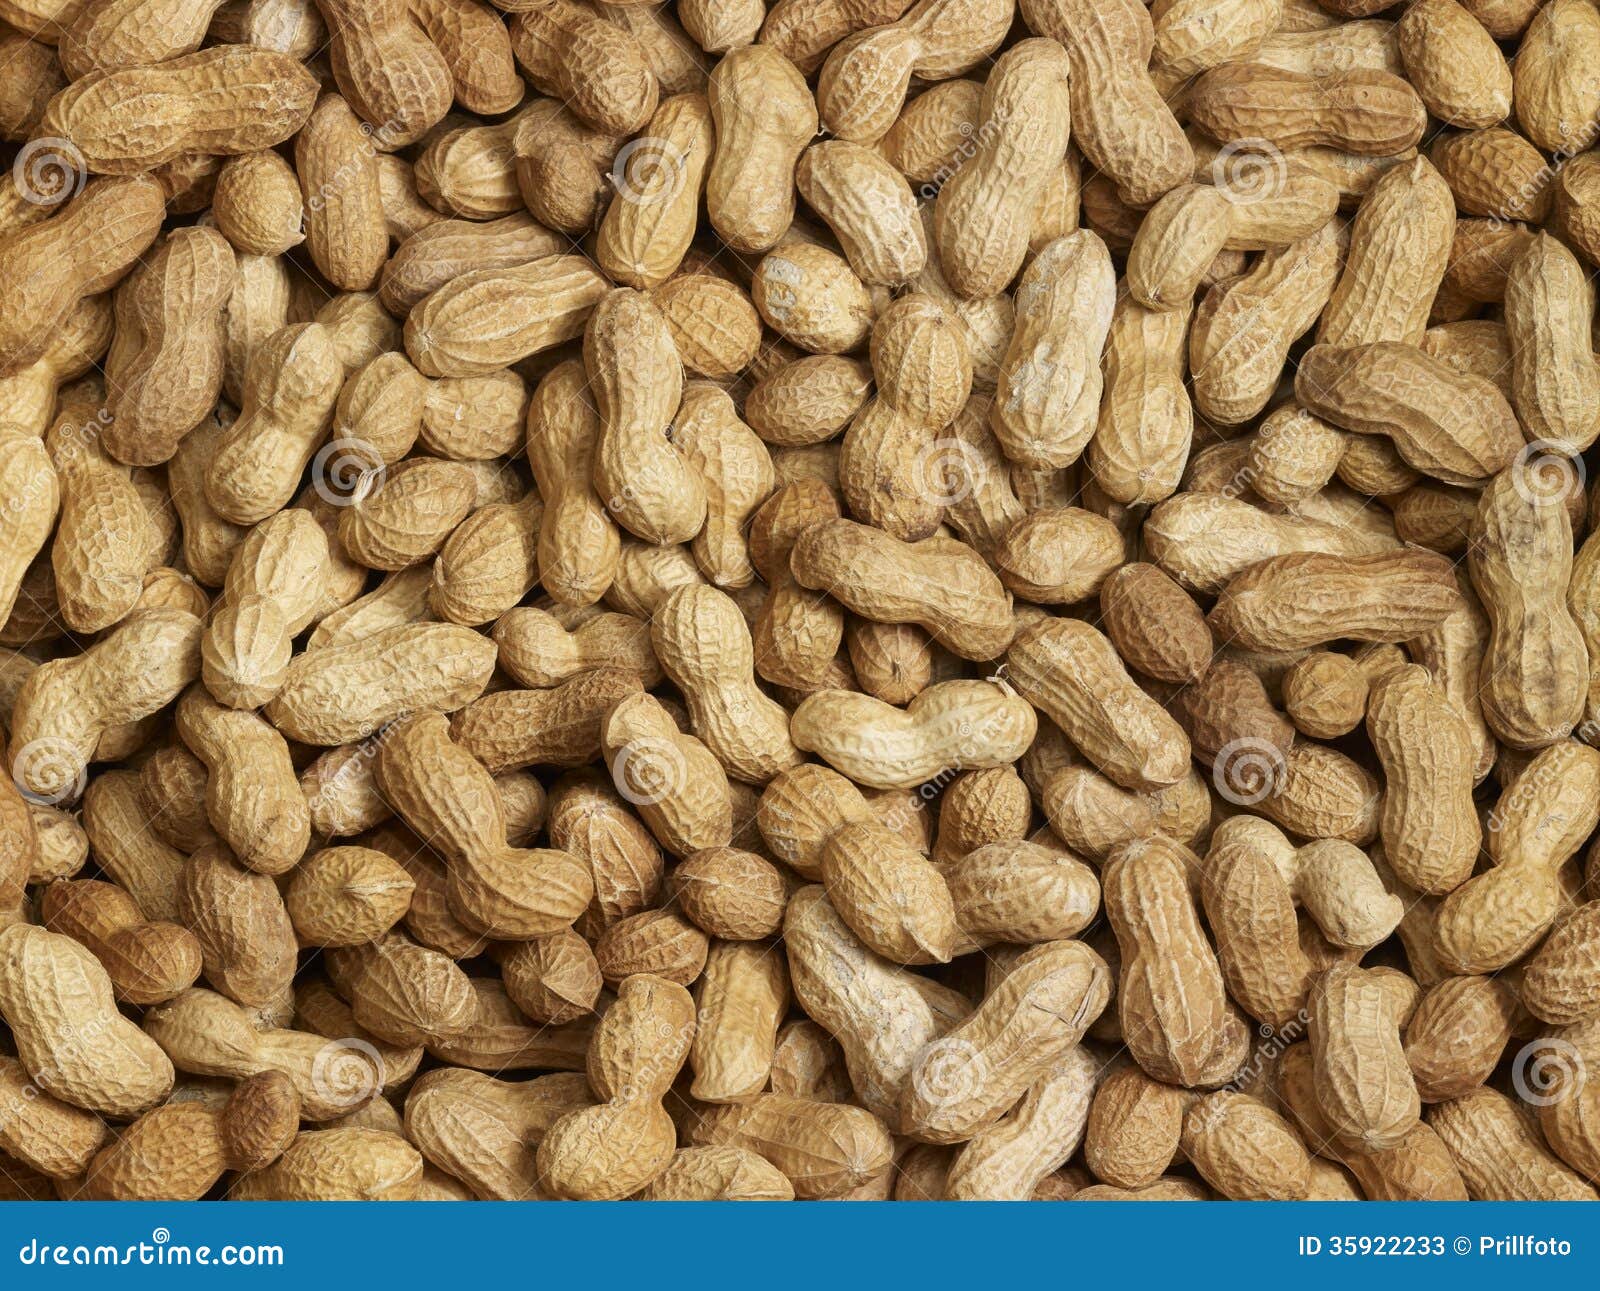 Lots Of Peanuts Stock Photos - Image: 359222331300 x 1066